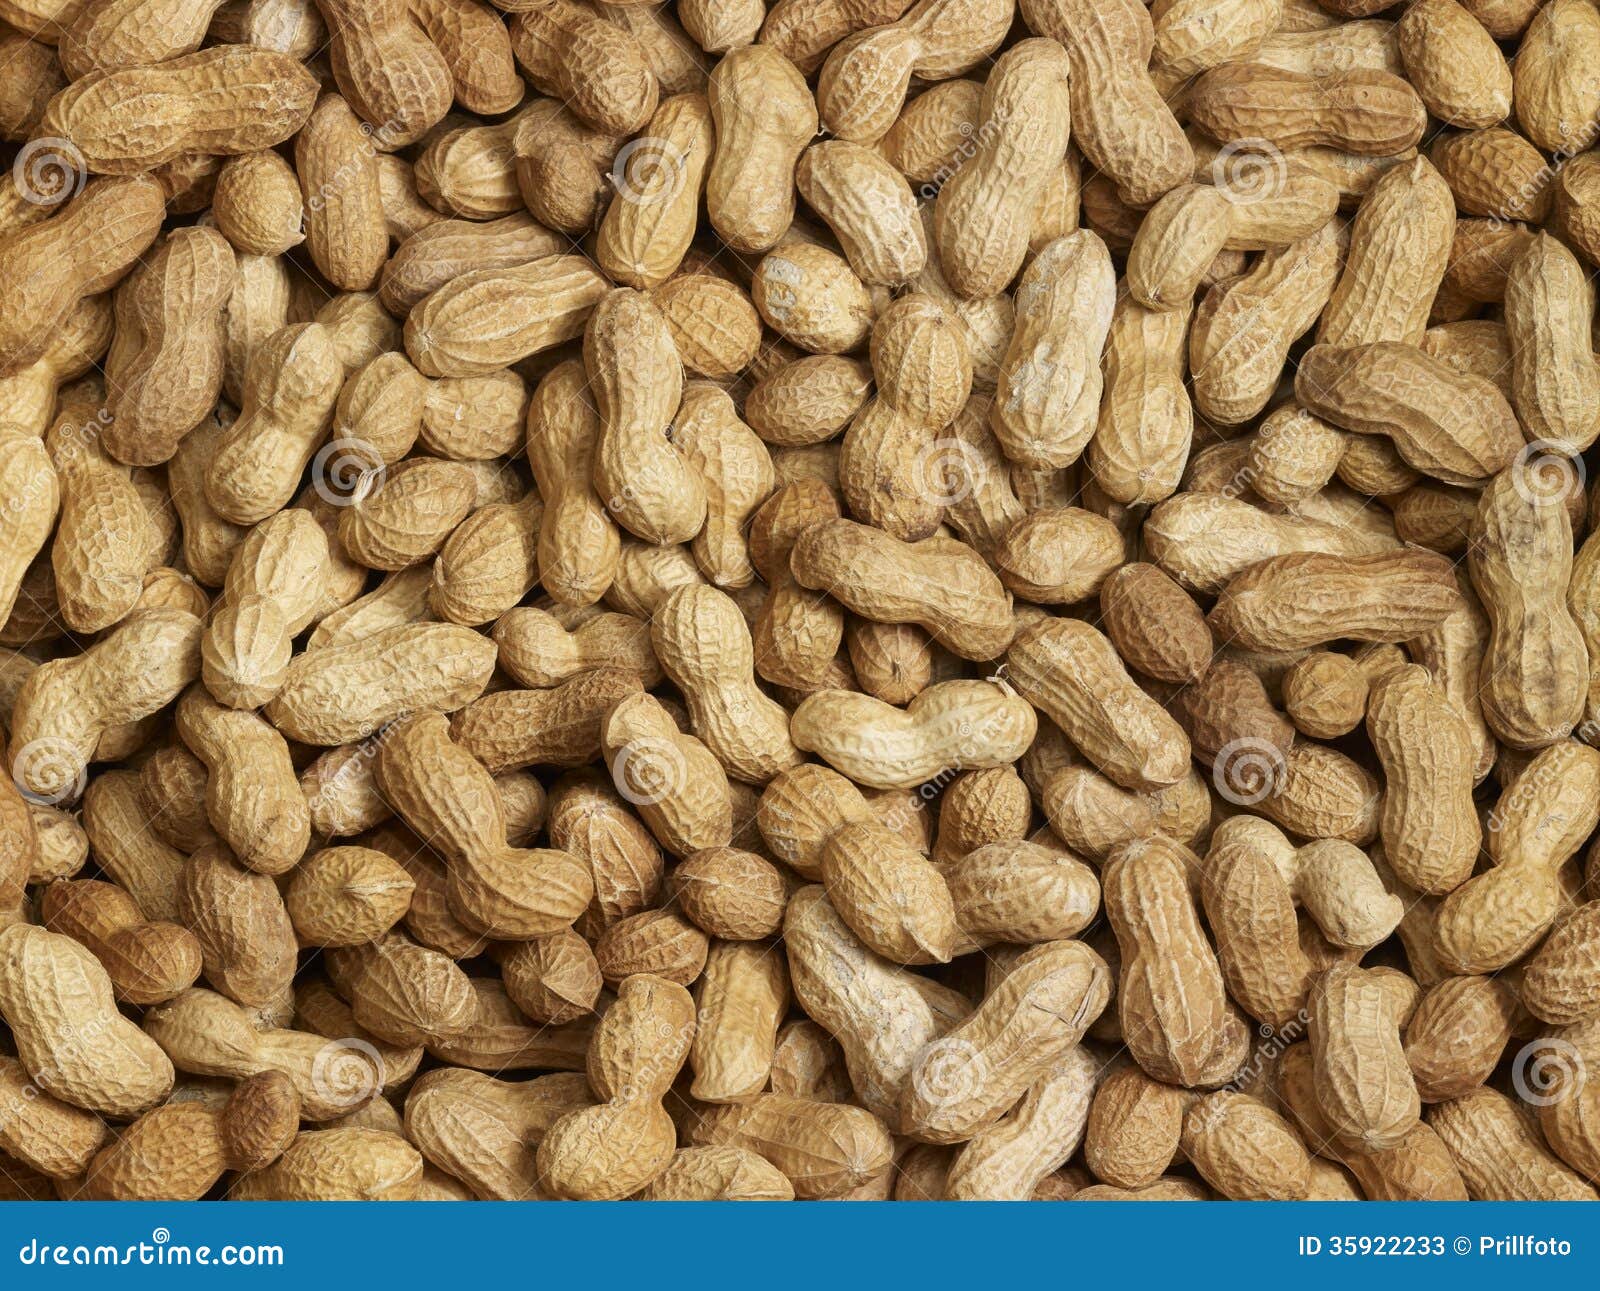 Lots Of Peanuts Stock Photos - Image: 359222331300 x 1066